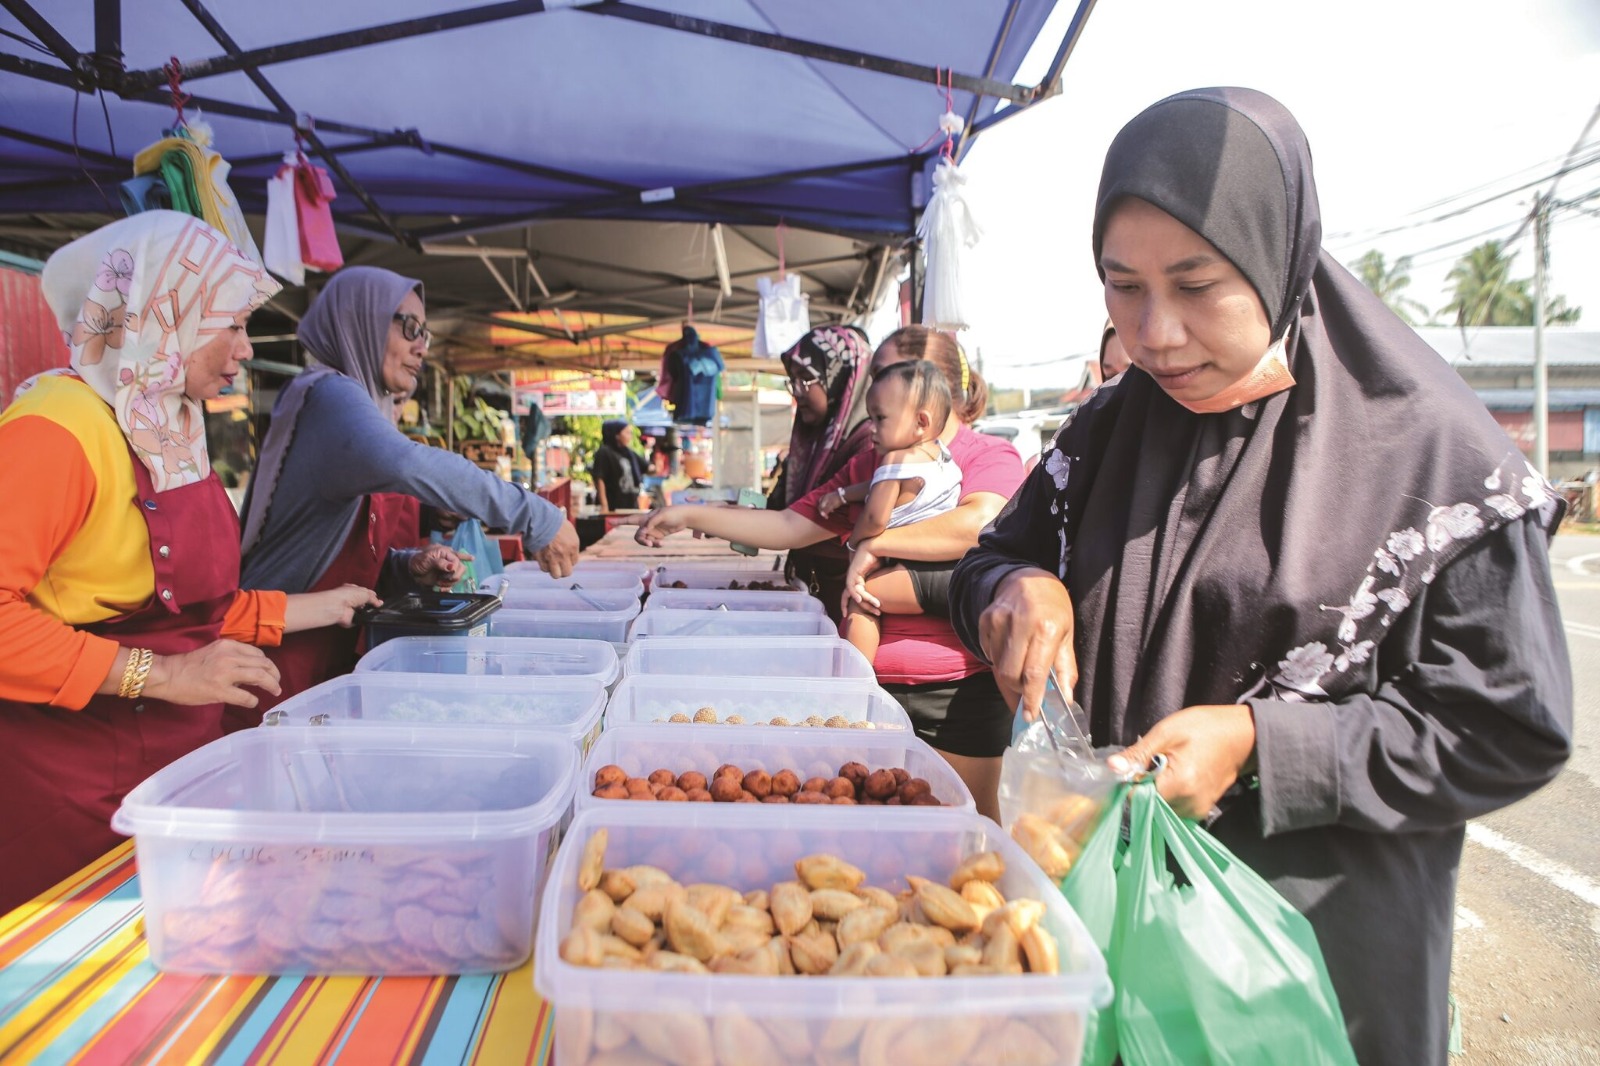 Customers buying from roslina saad's kuih stall in kedah